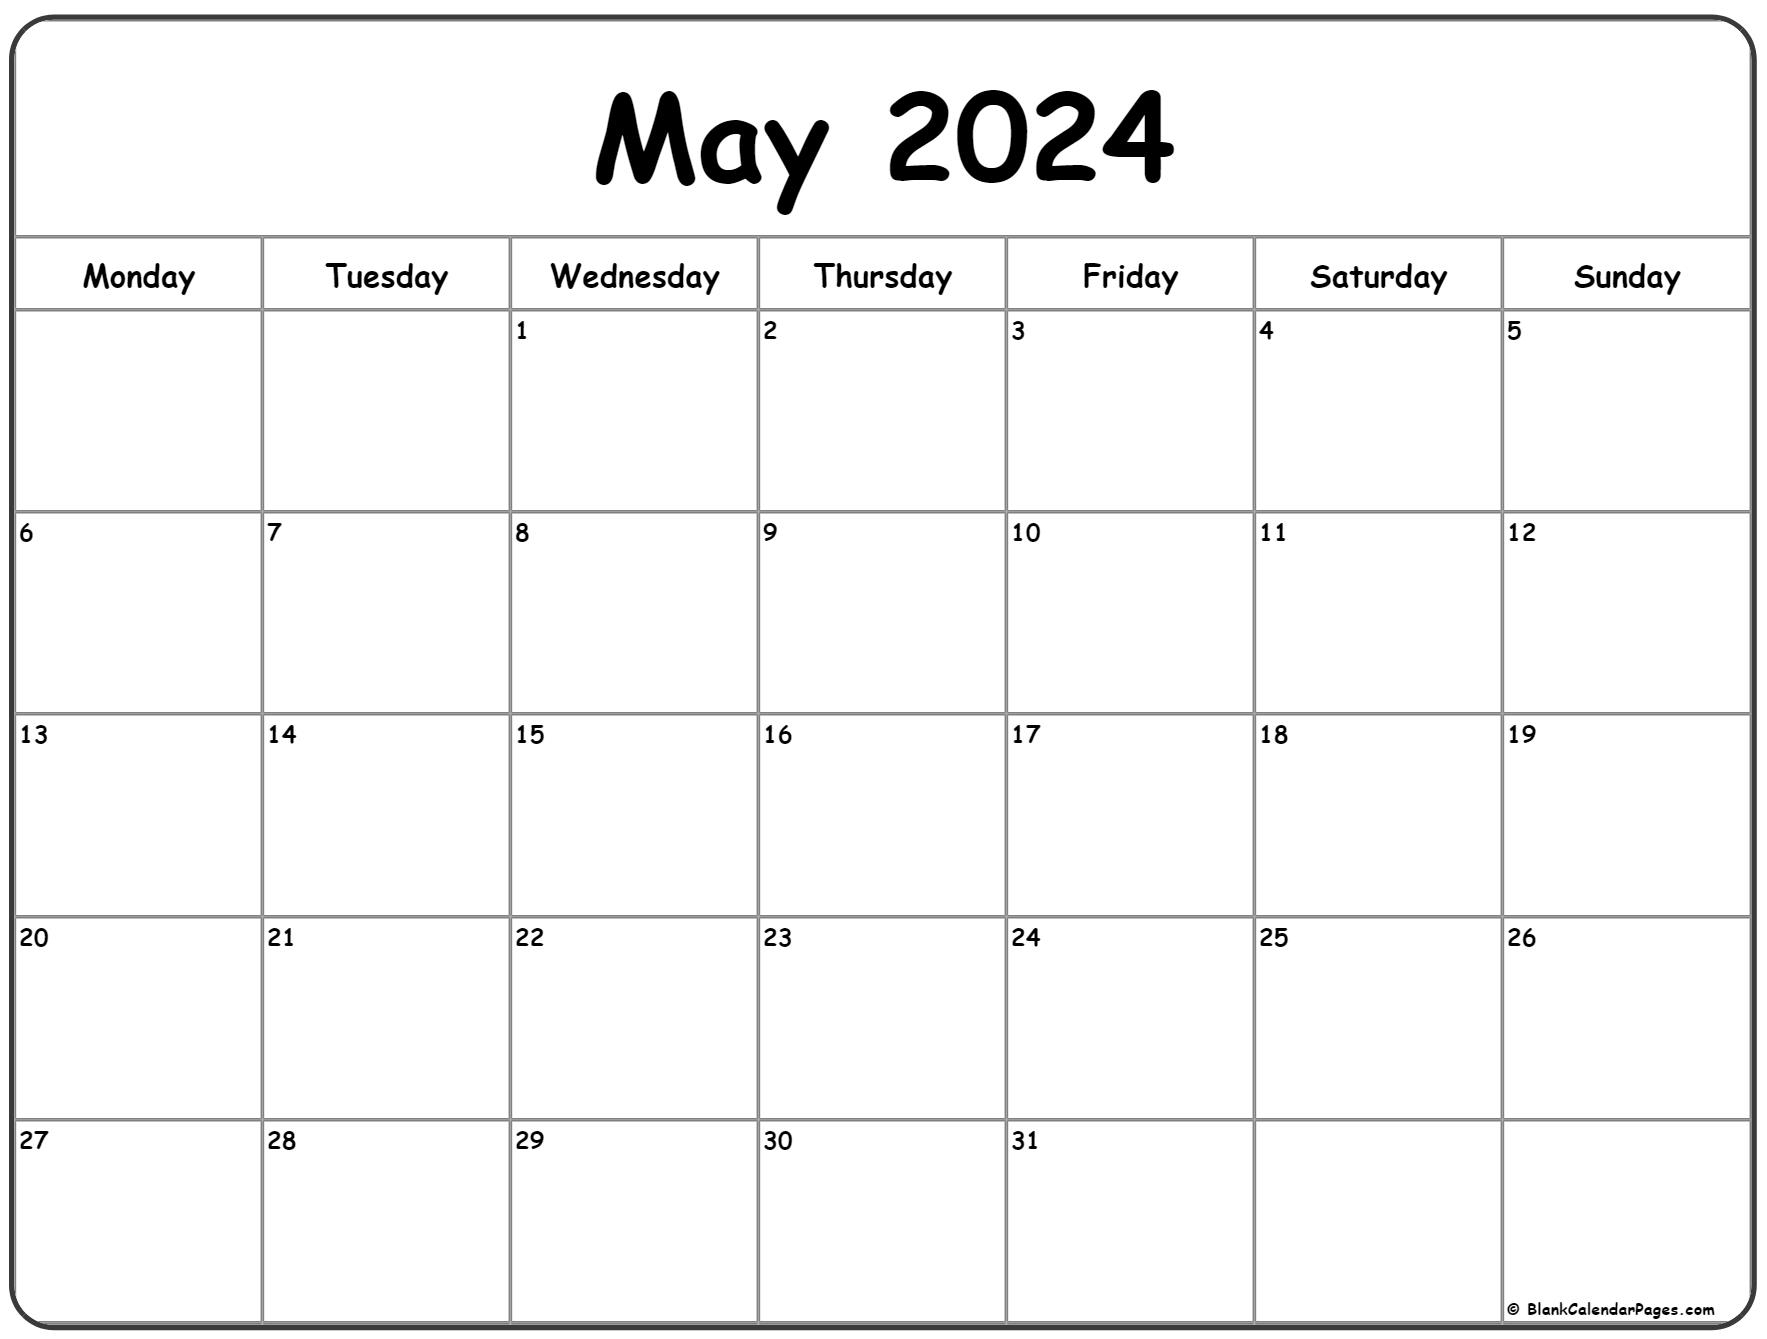 May 2024 Monday Calendar | Monday To Sunday for Printable May 2024 Calendar Page